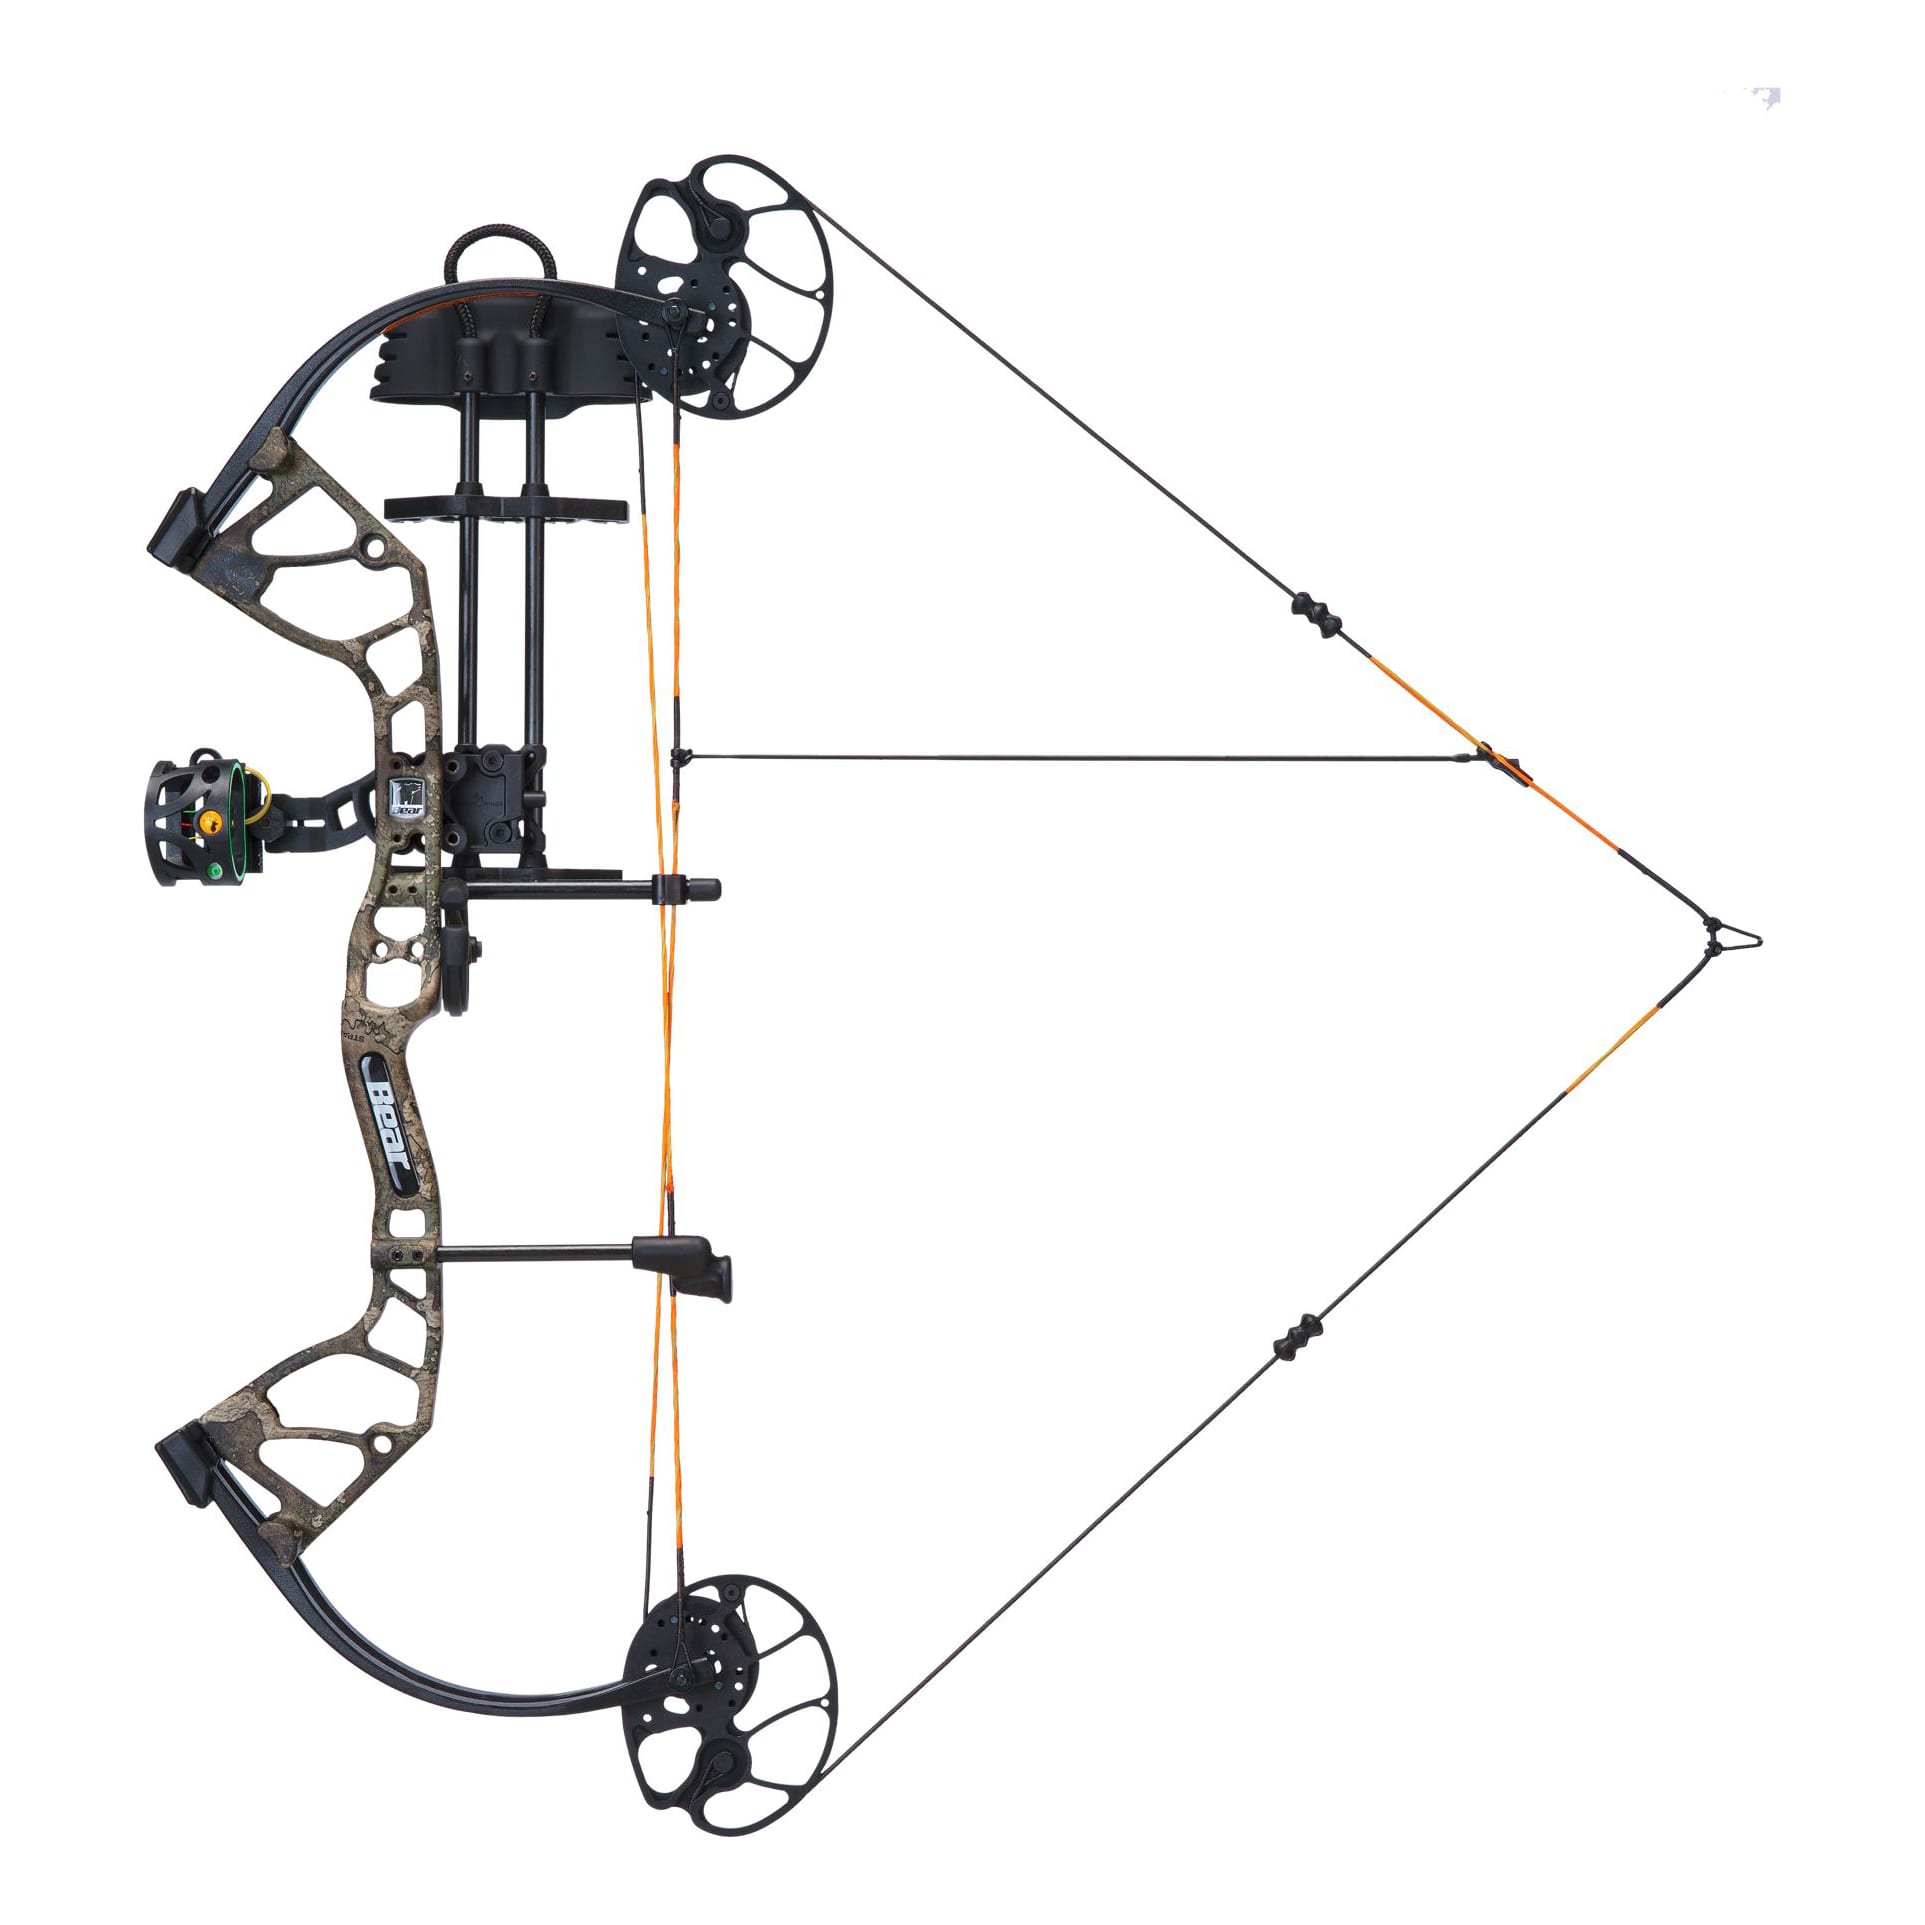 Bear® Archery Royale RTH Compound Bow Package - TrueTimber Strata - Drawn View,Bear® Archery Royale RTH Compound Bow Package - TrueTimber Strata - Drawn View